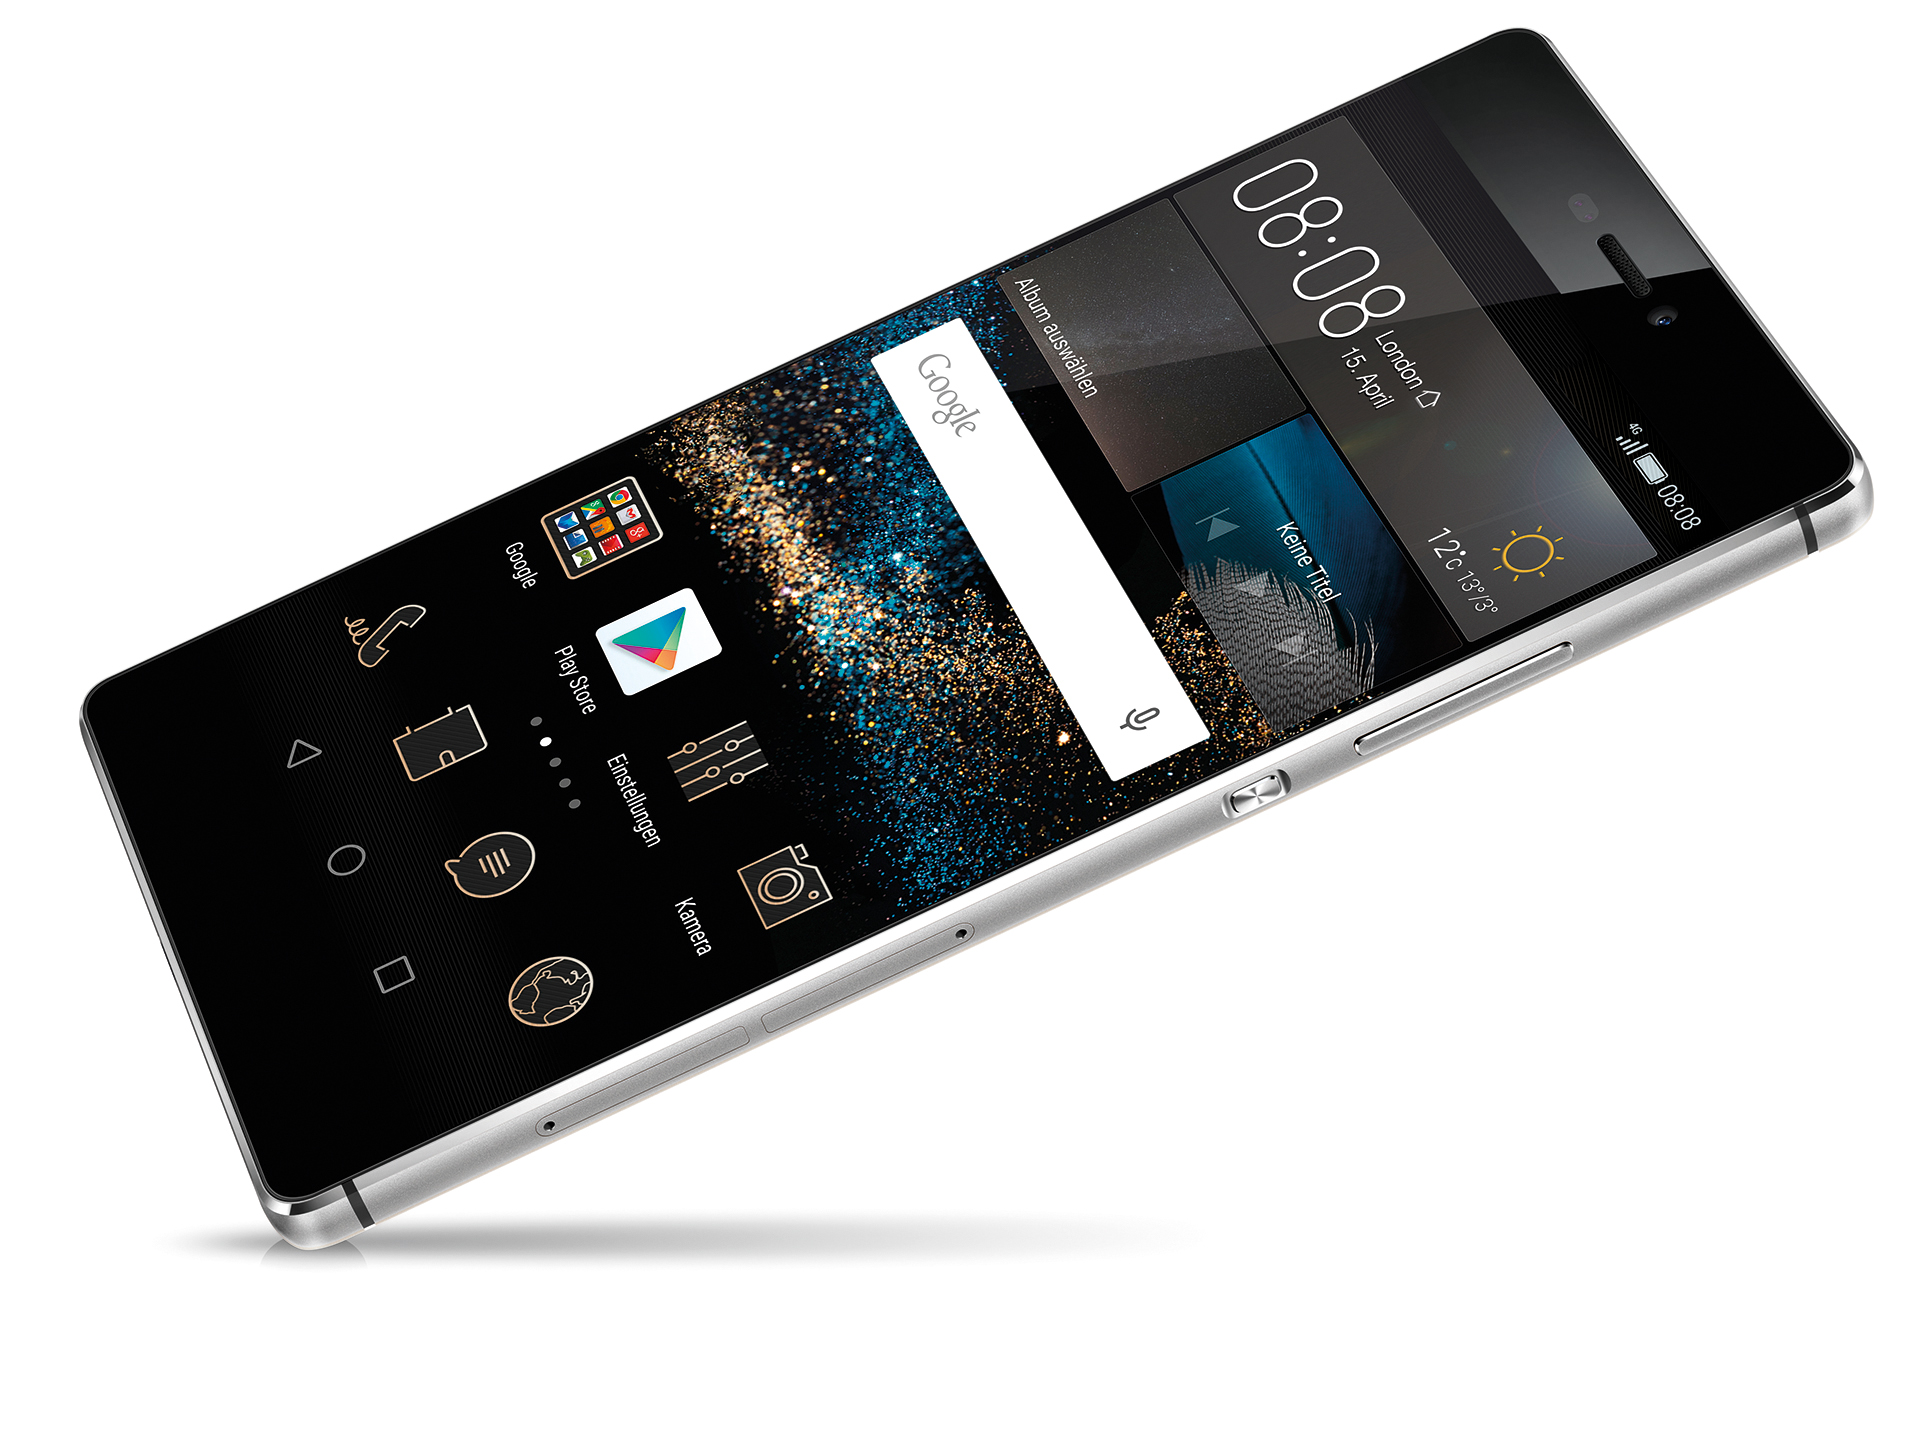 Onderhandelen Verwoesting Briesje Huawei P8 Smartphone First Impressions - NotebookCheck.net Reviews